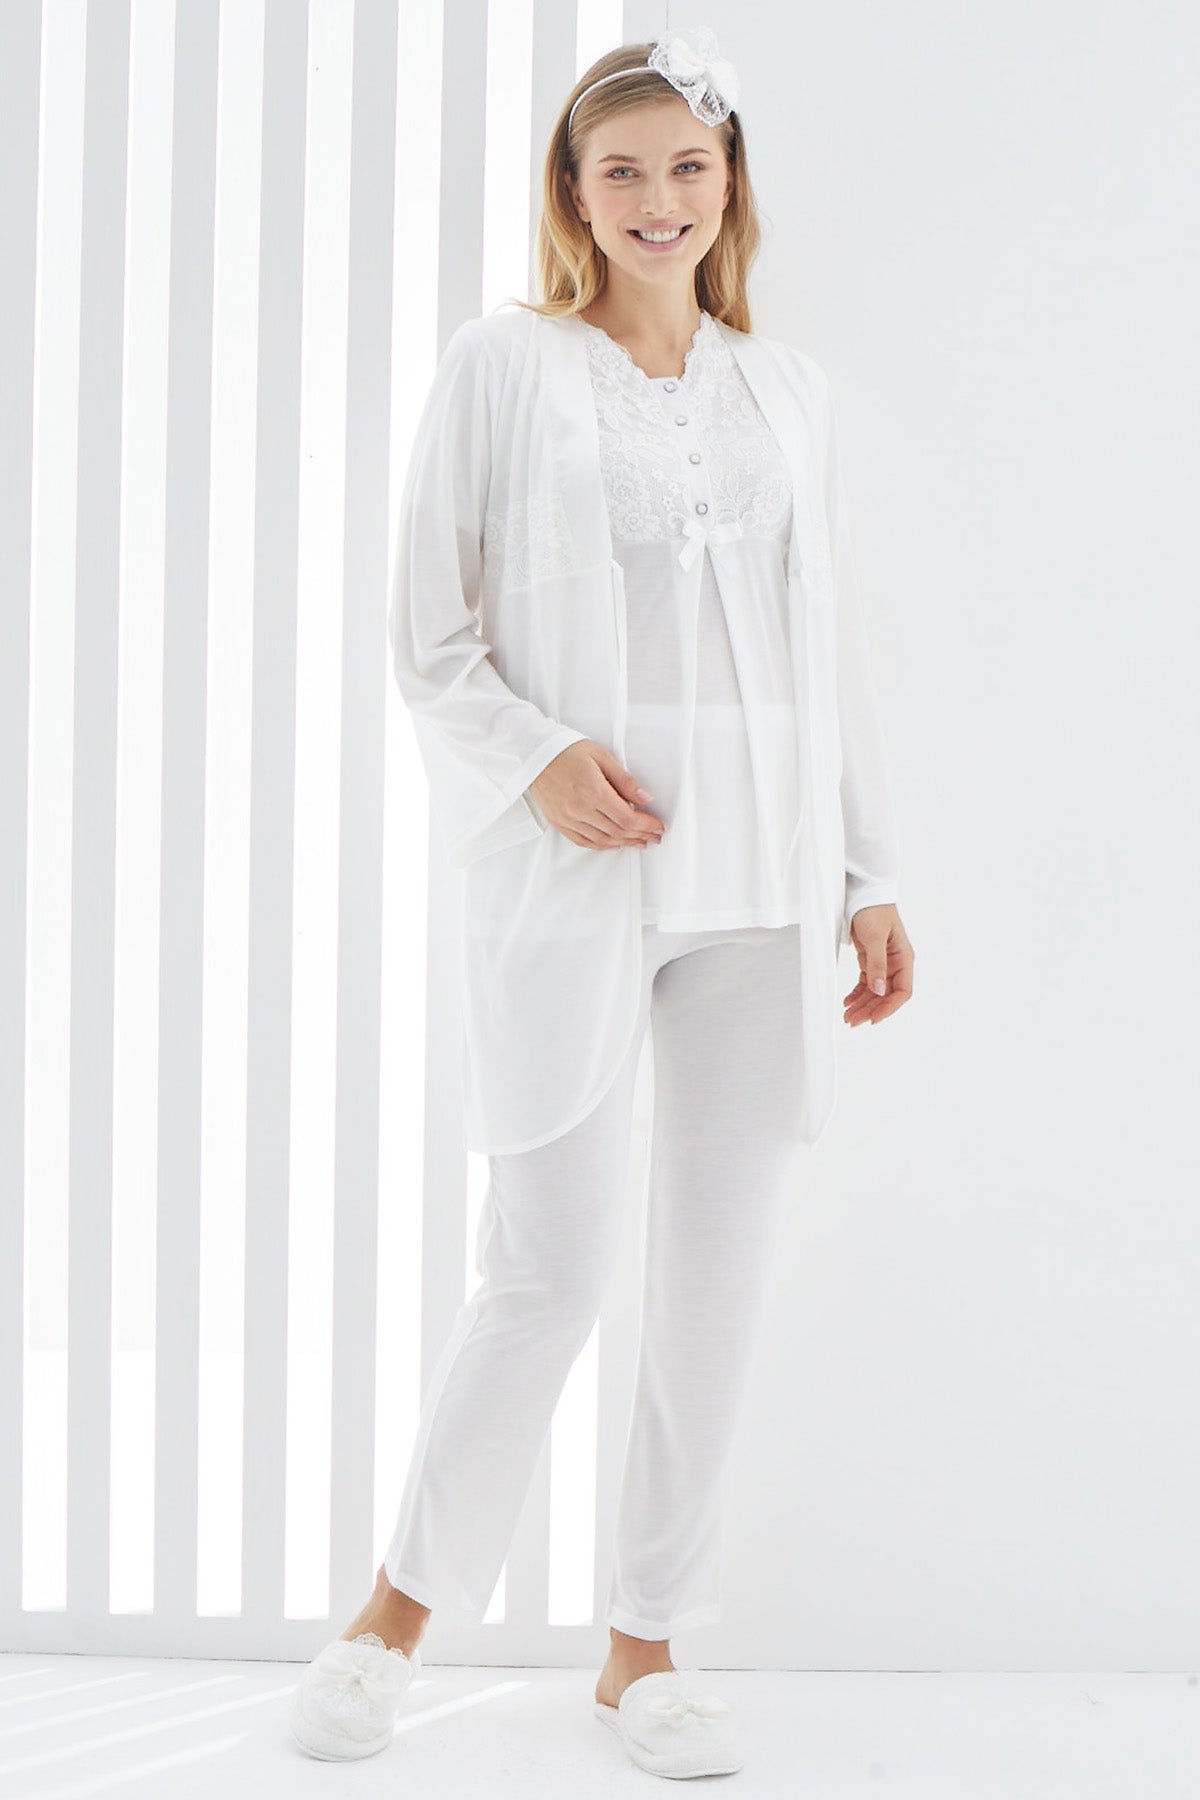 Shopymommy 3410 Lace Collar 3-Pieces Maternity & Nursing Pajamas With Robe Ecru